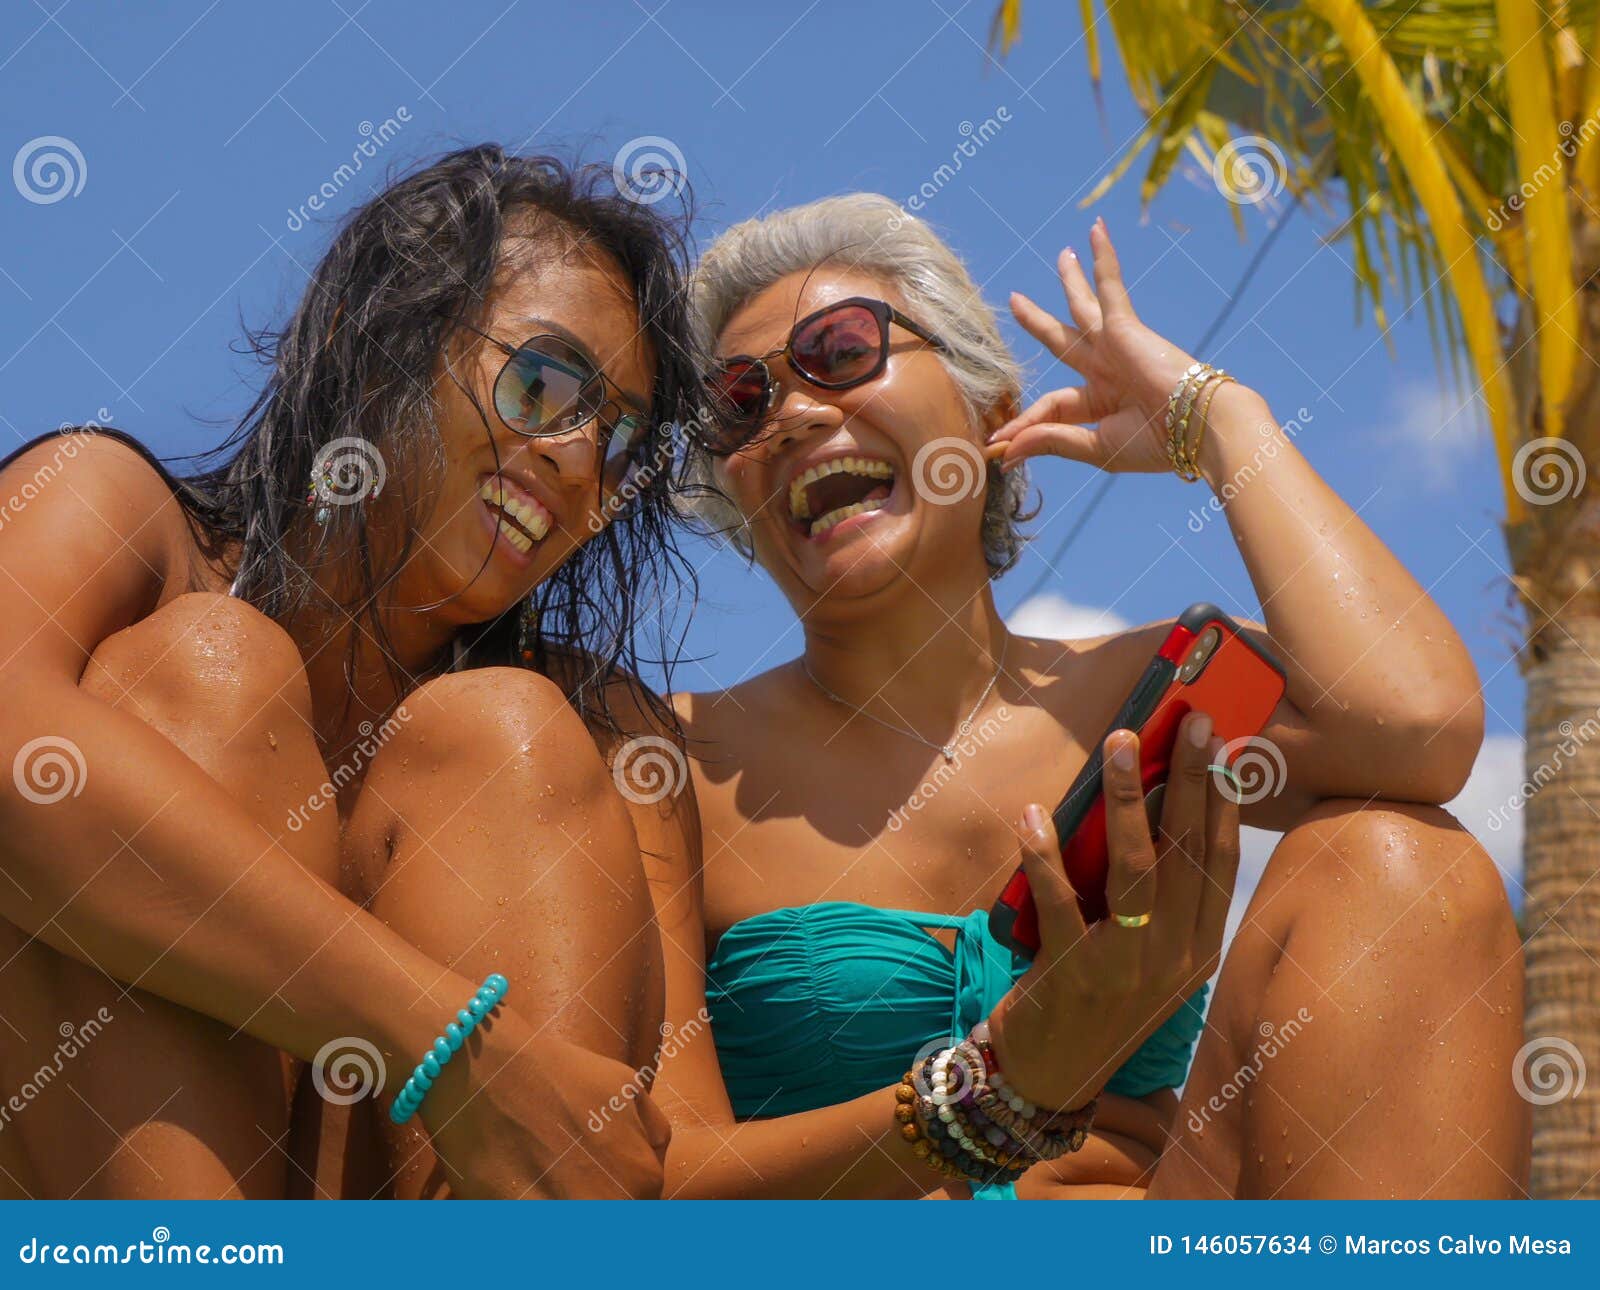 https://thumbs.dreamstime.com/z/asian-girlfriends-bikini-enjoying-summer-holidays-tropical-beach-resort-swimming-pool-having-fun-using-mobile-phone-together-146057634.jpg